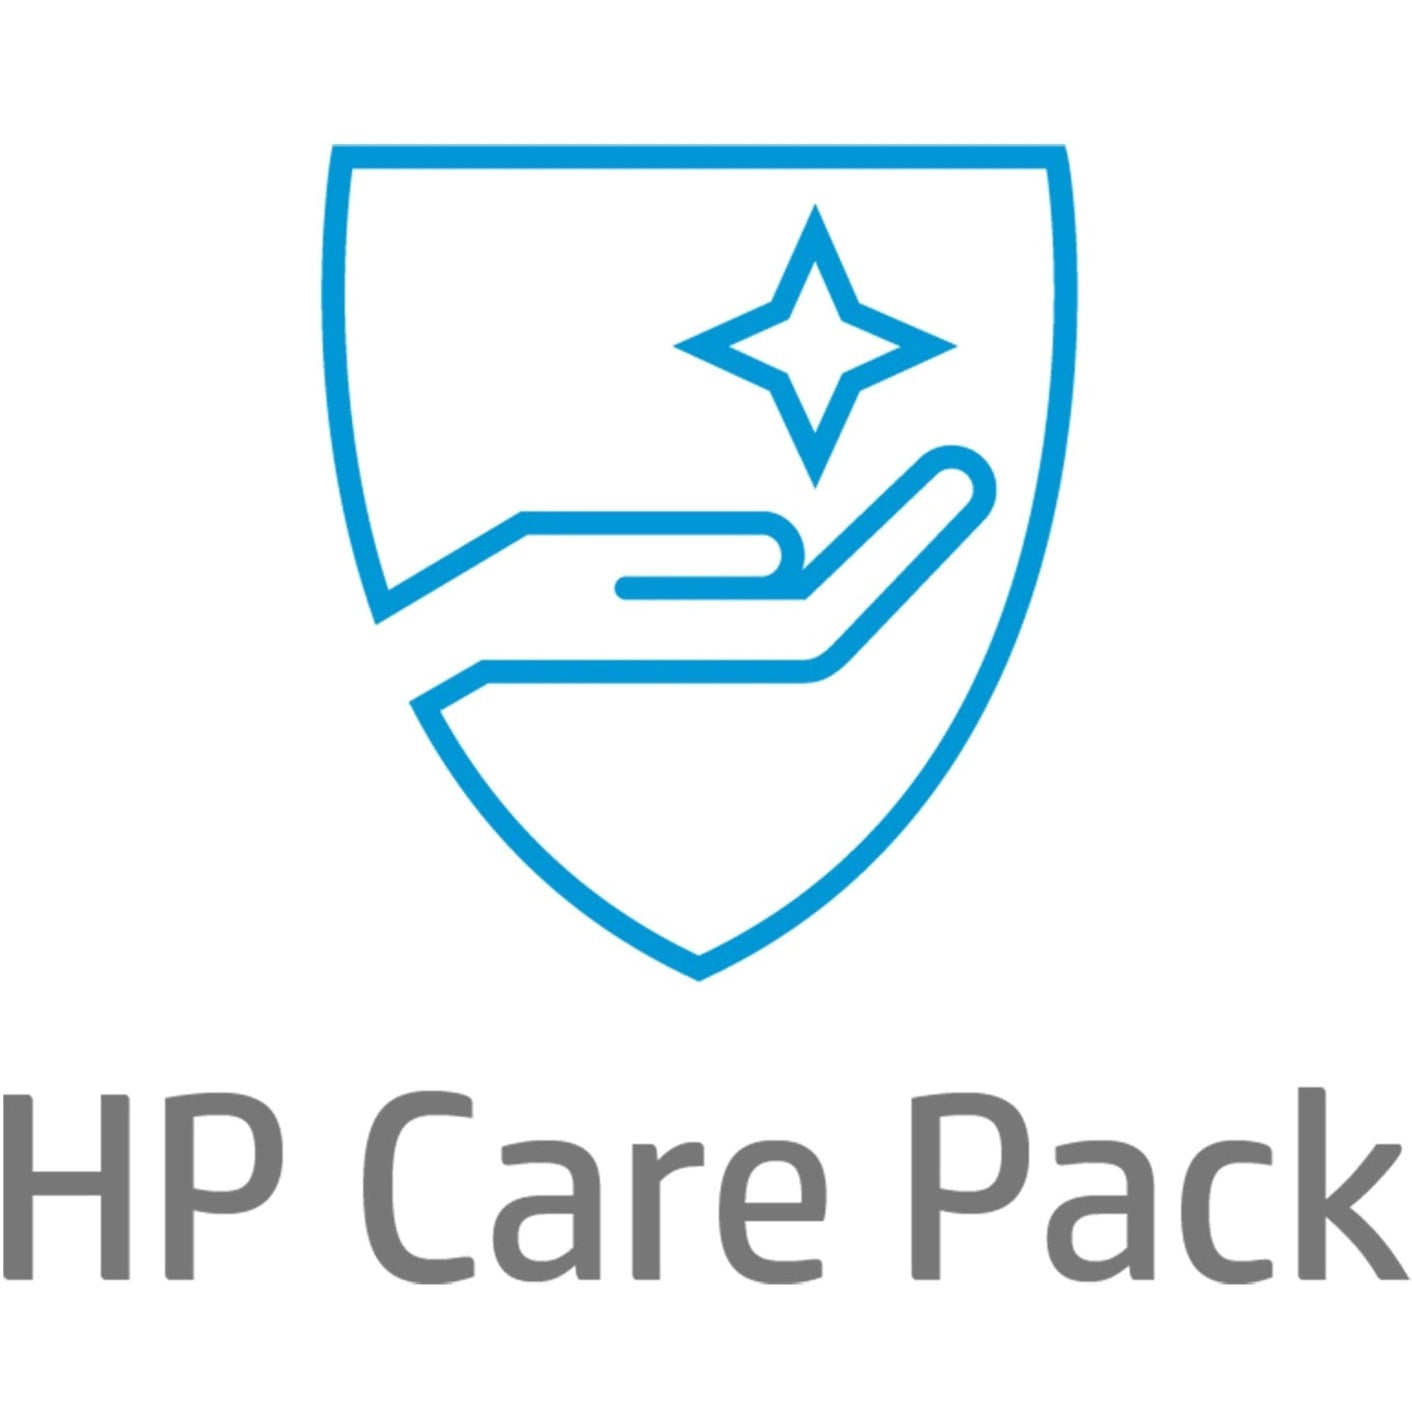 HP Care Pack - 5 Year - Warranty (U9WW0E)